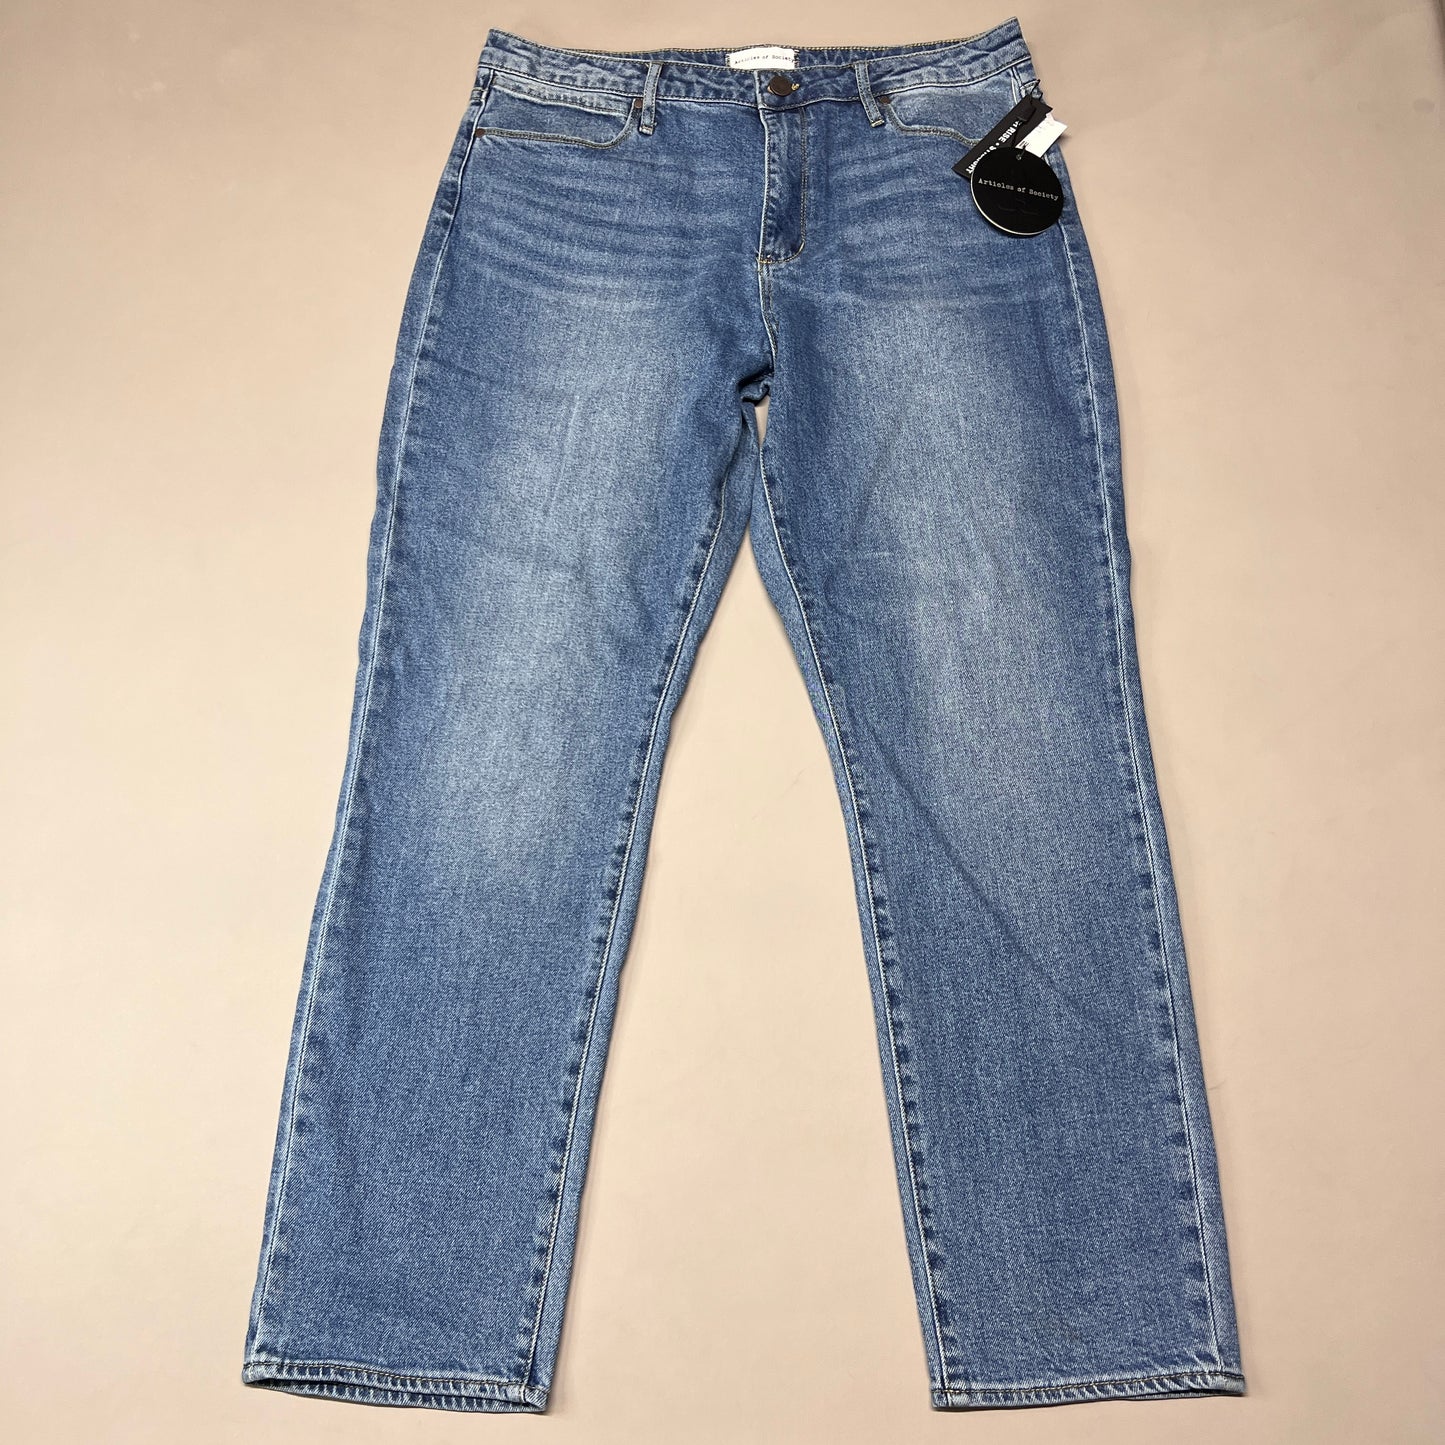 ARTICLES OF SOCIETY OMAO High Rise Denim Jeans Women's Sz 32 Blue 4009TQ3-716 (New)